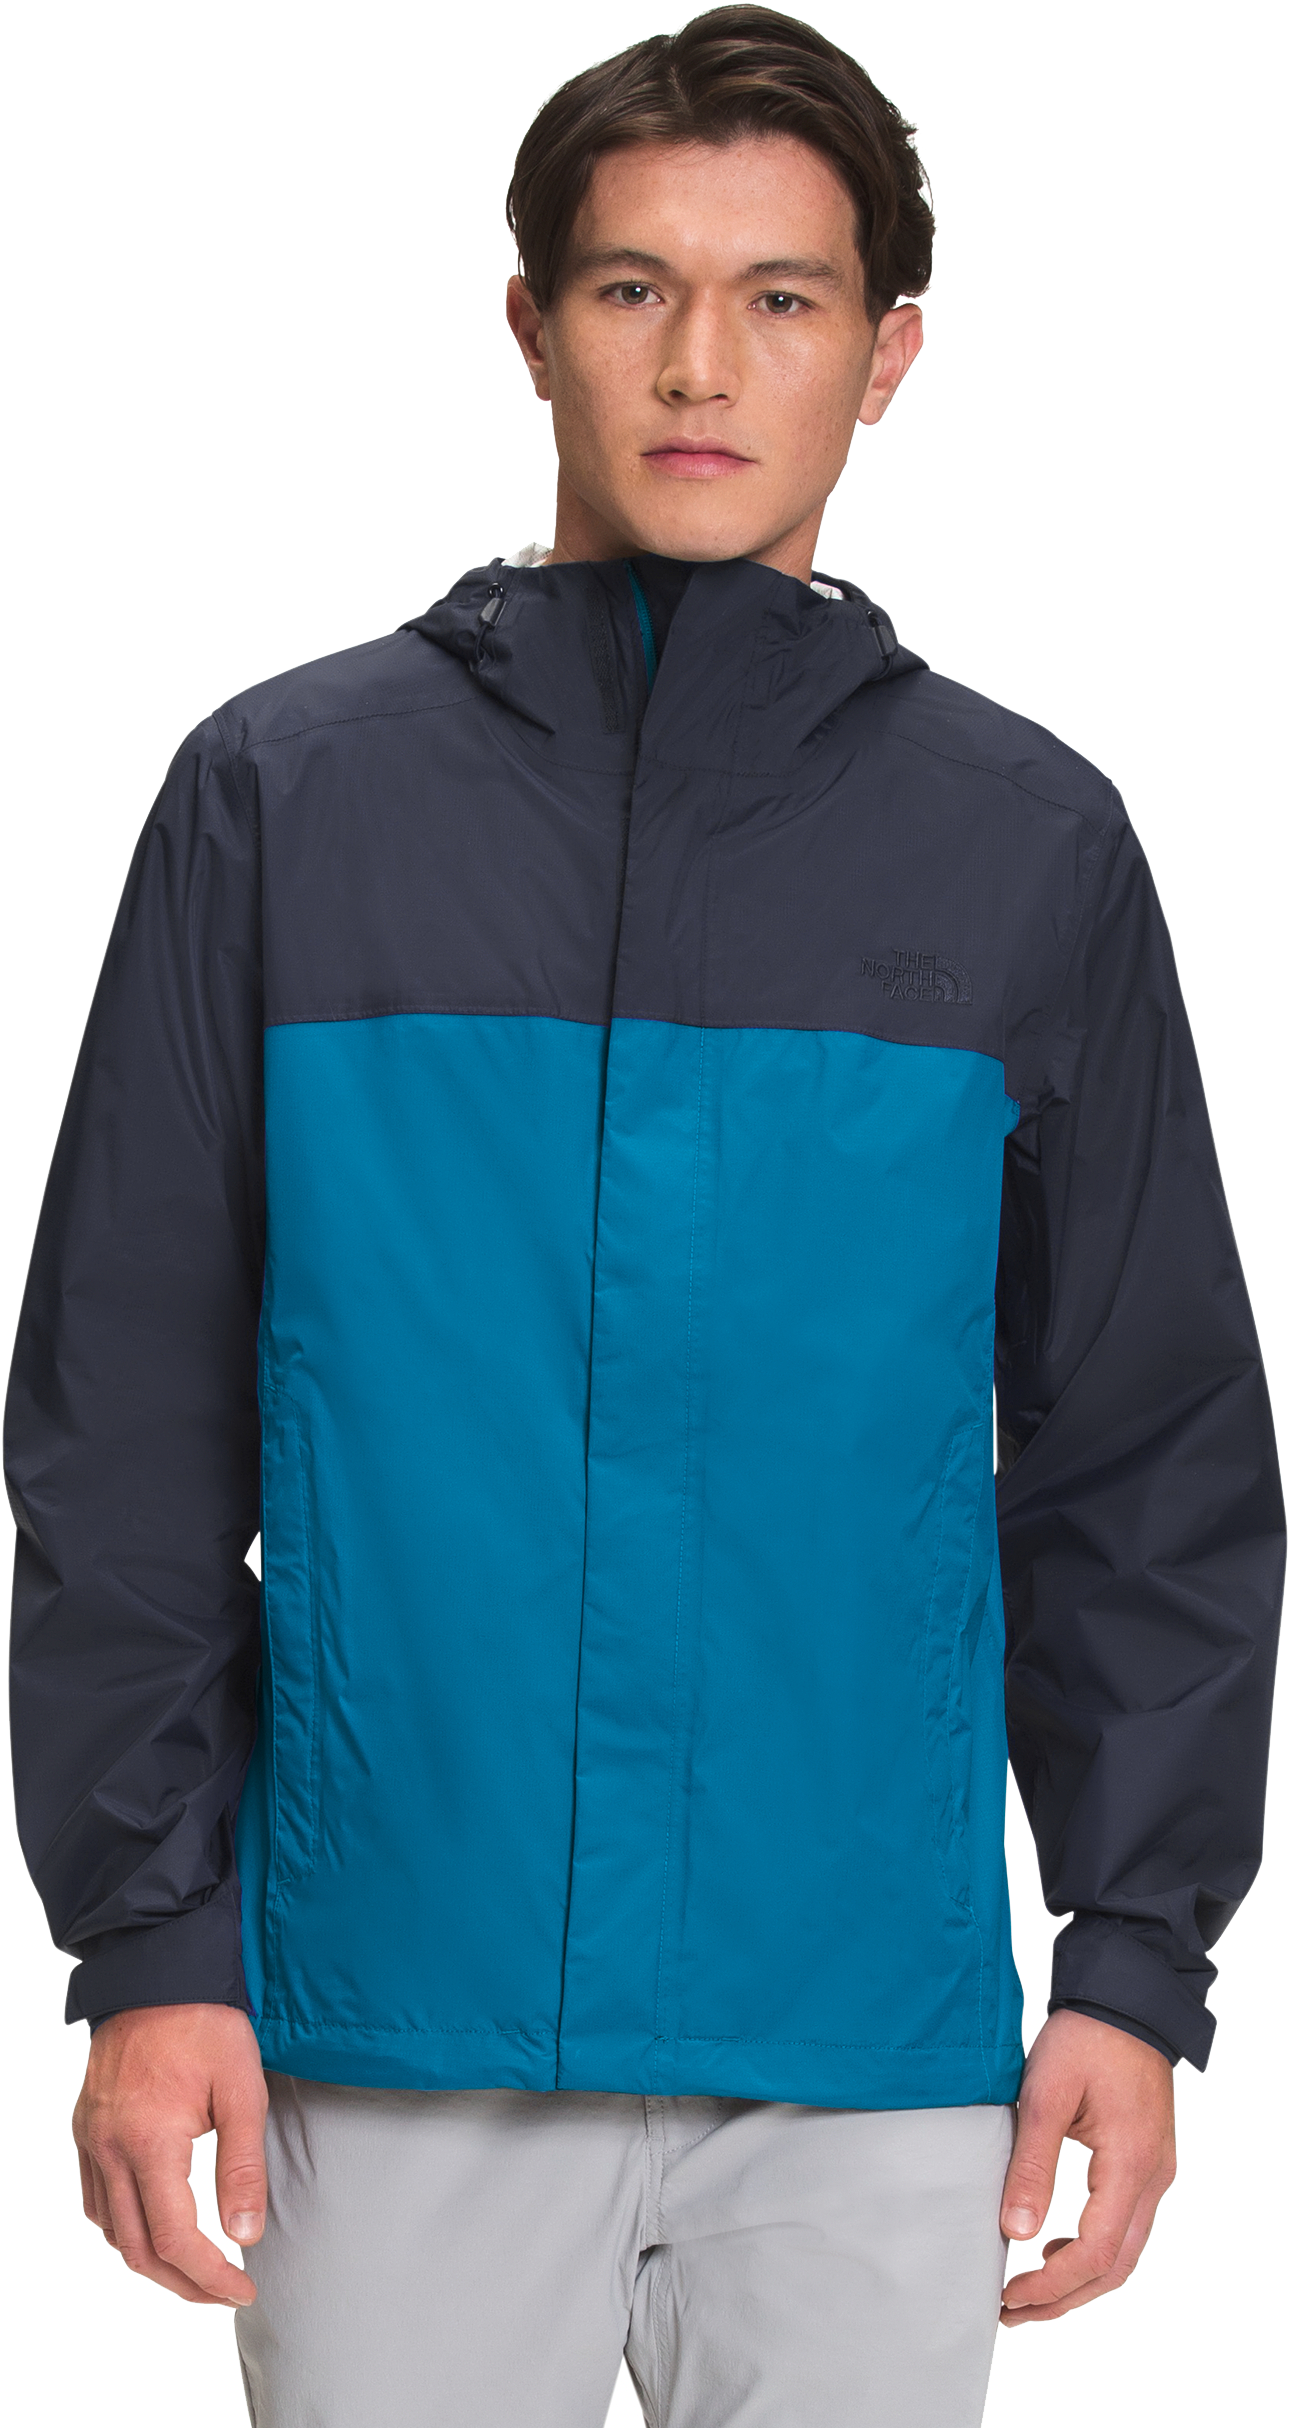 The North Face Venture 2 Jacket for Men - Aviator Navy/Banff Blue - L